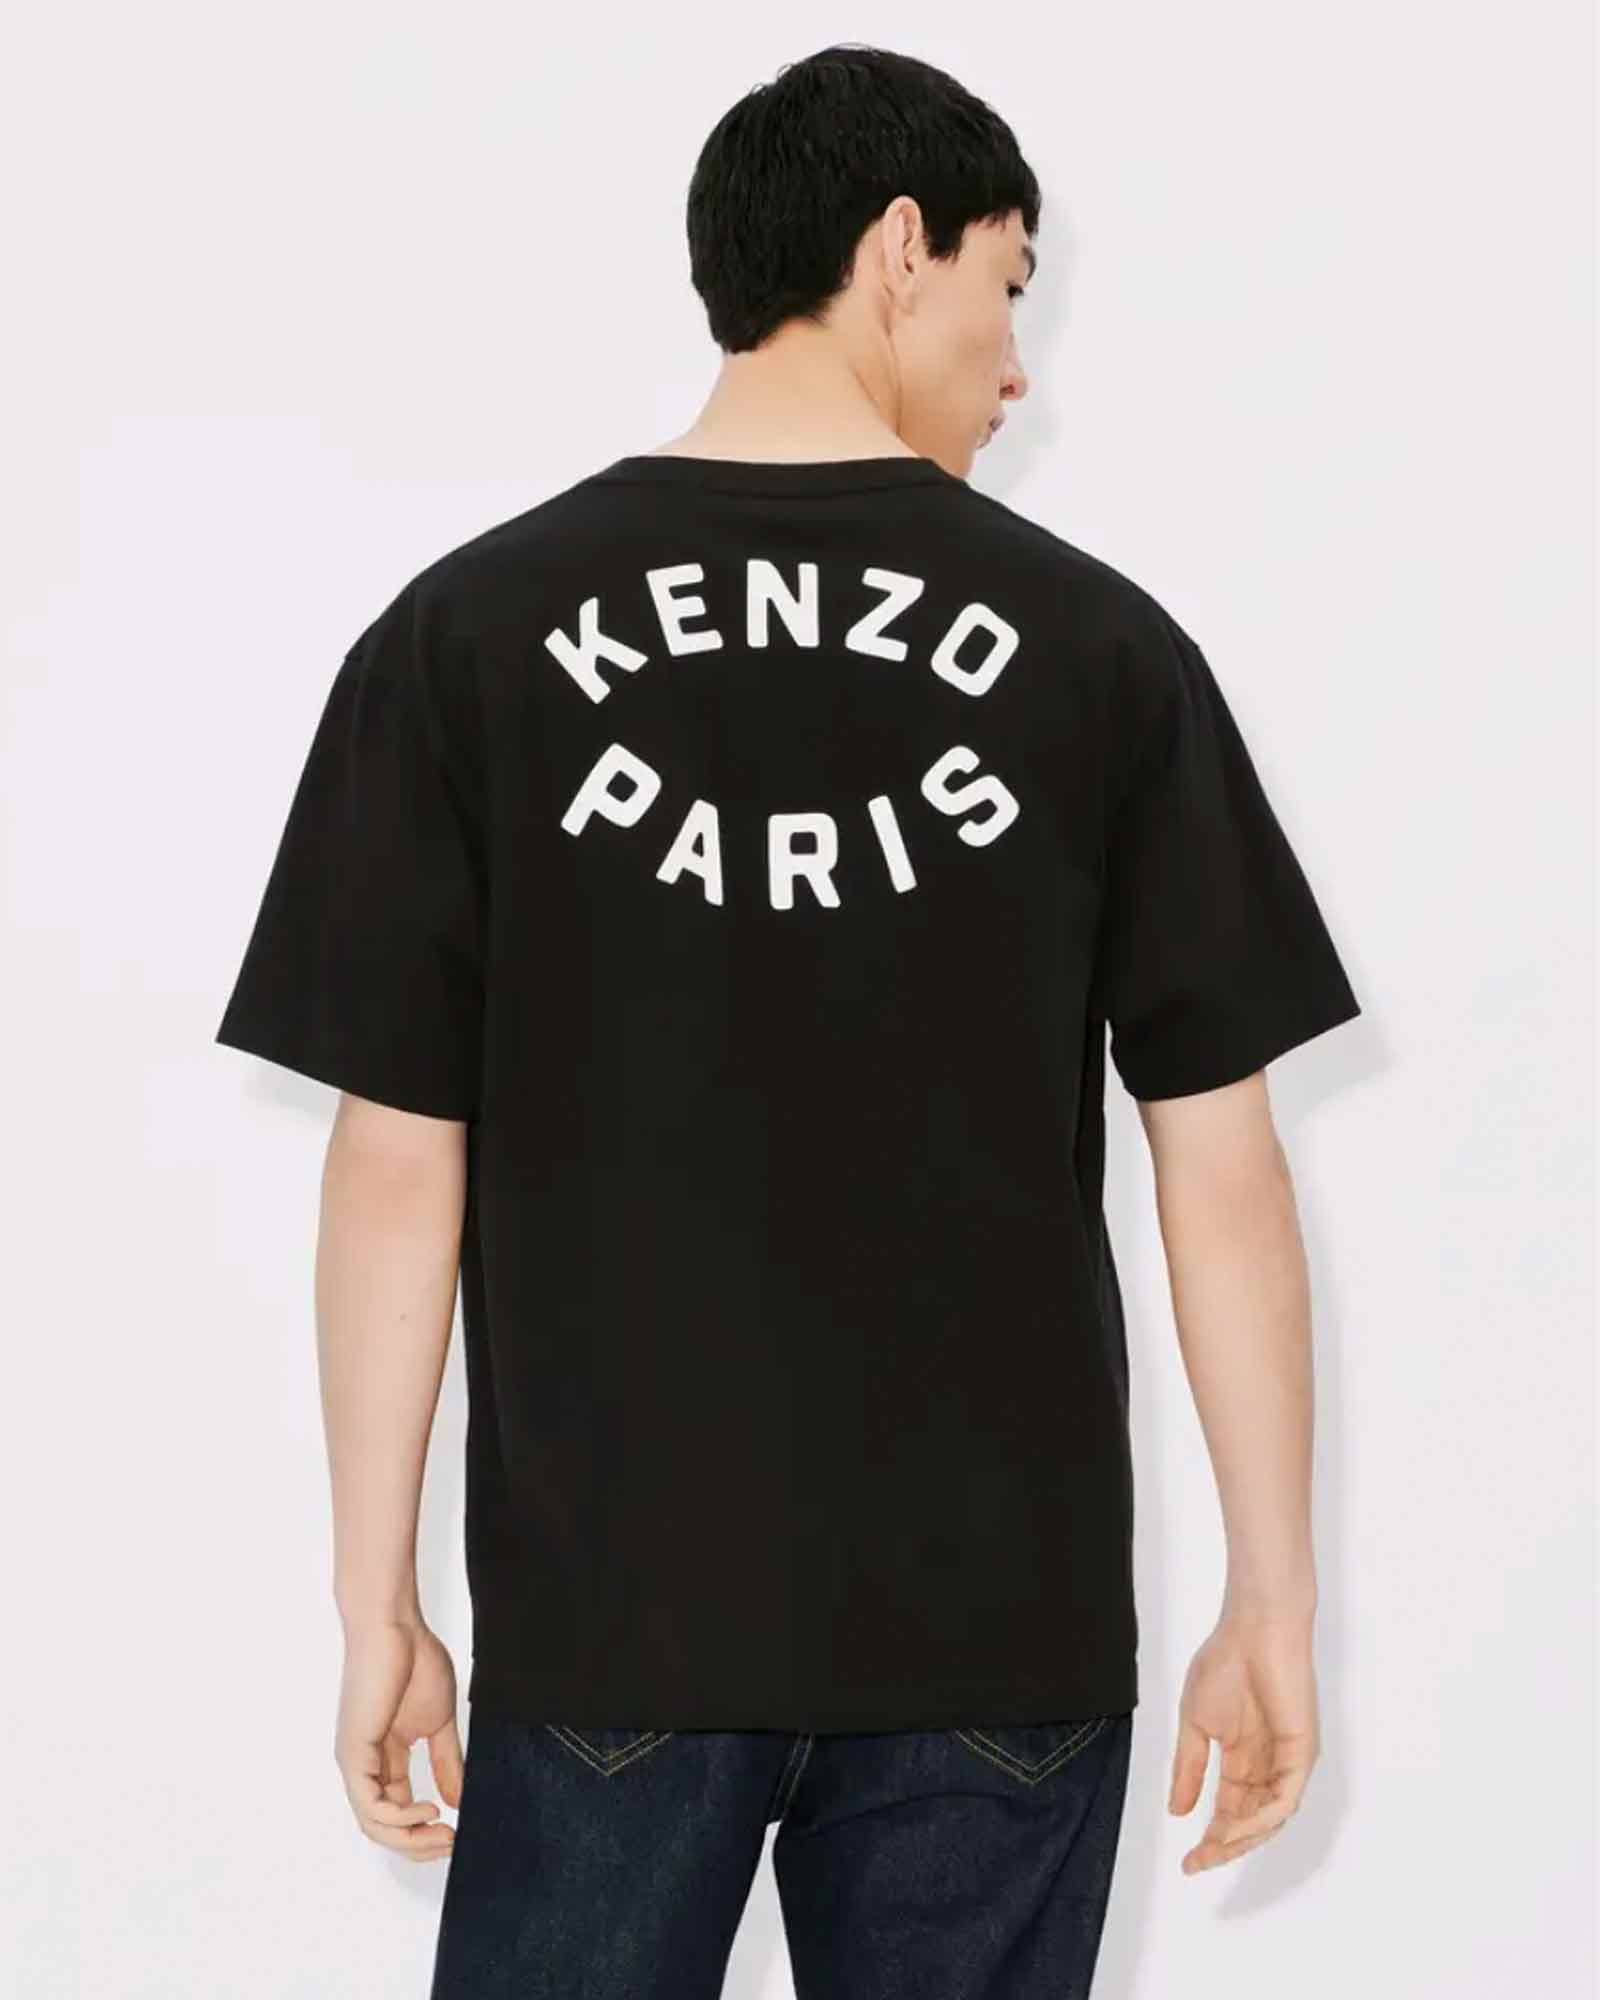 KENZO ネオン ロゴ Tシャツワンピース 美品 入手困難 | www ...